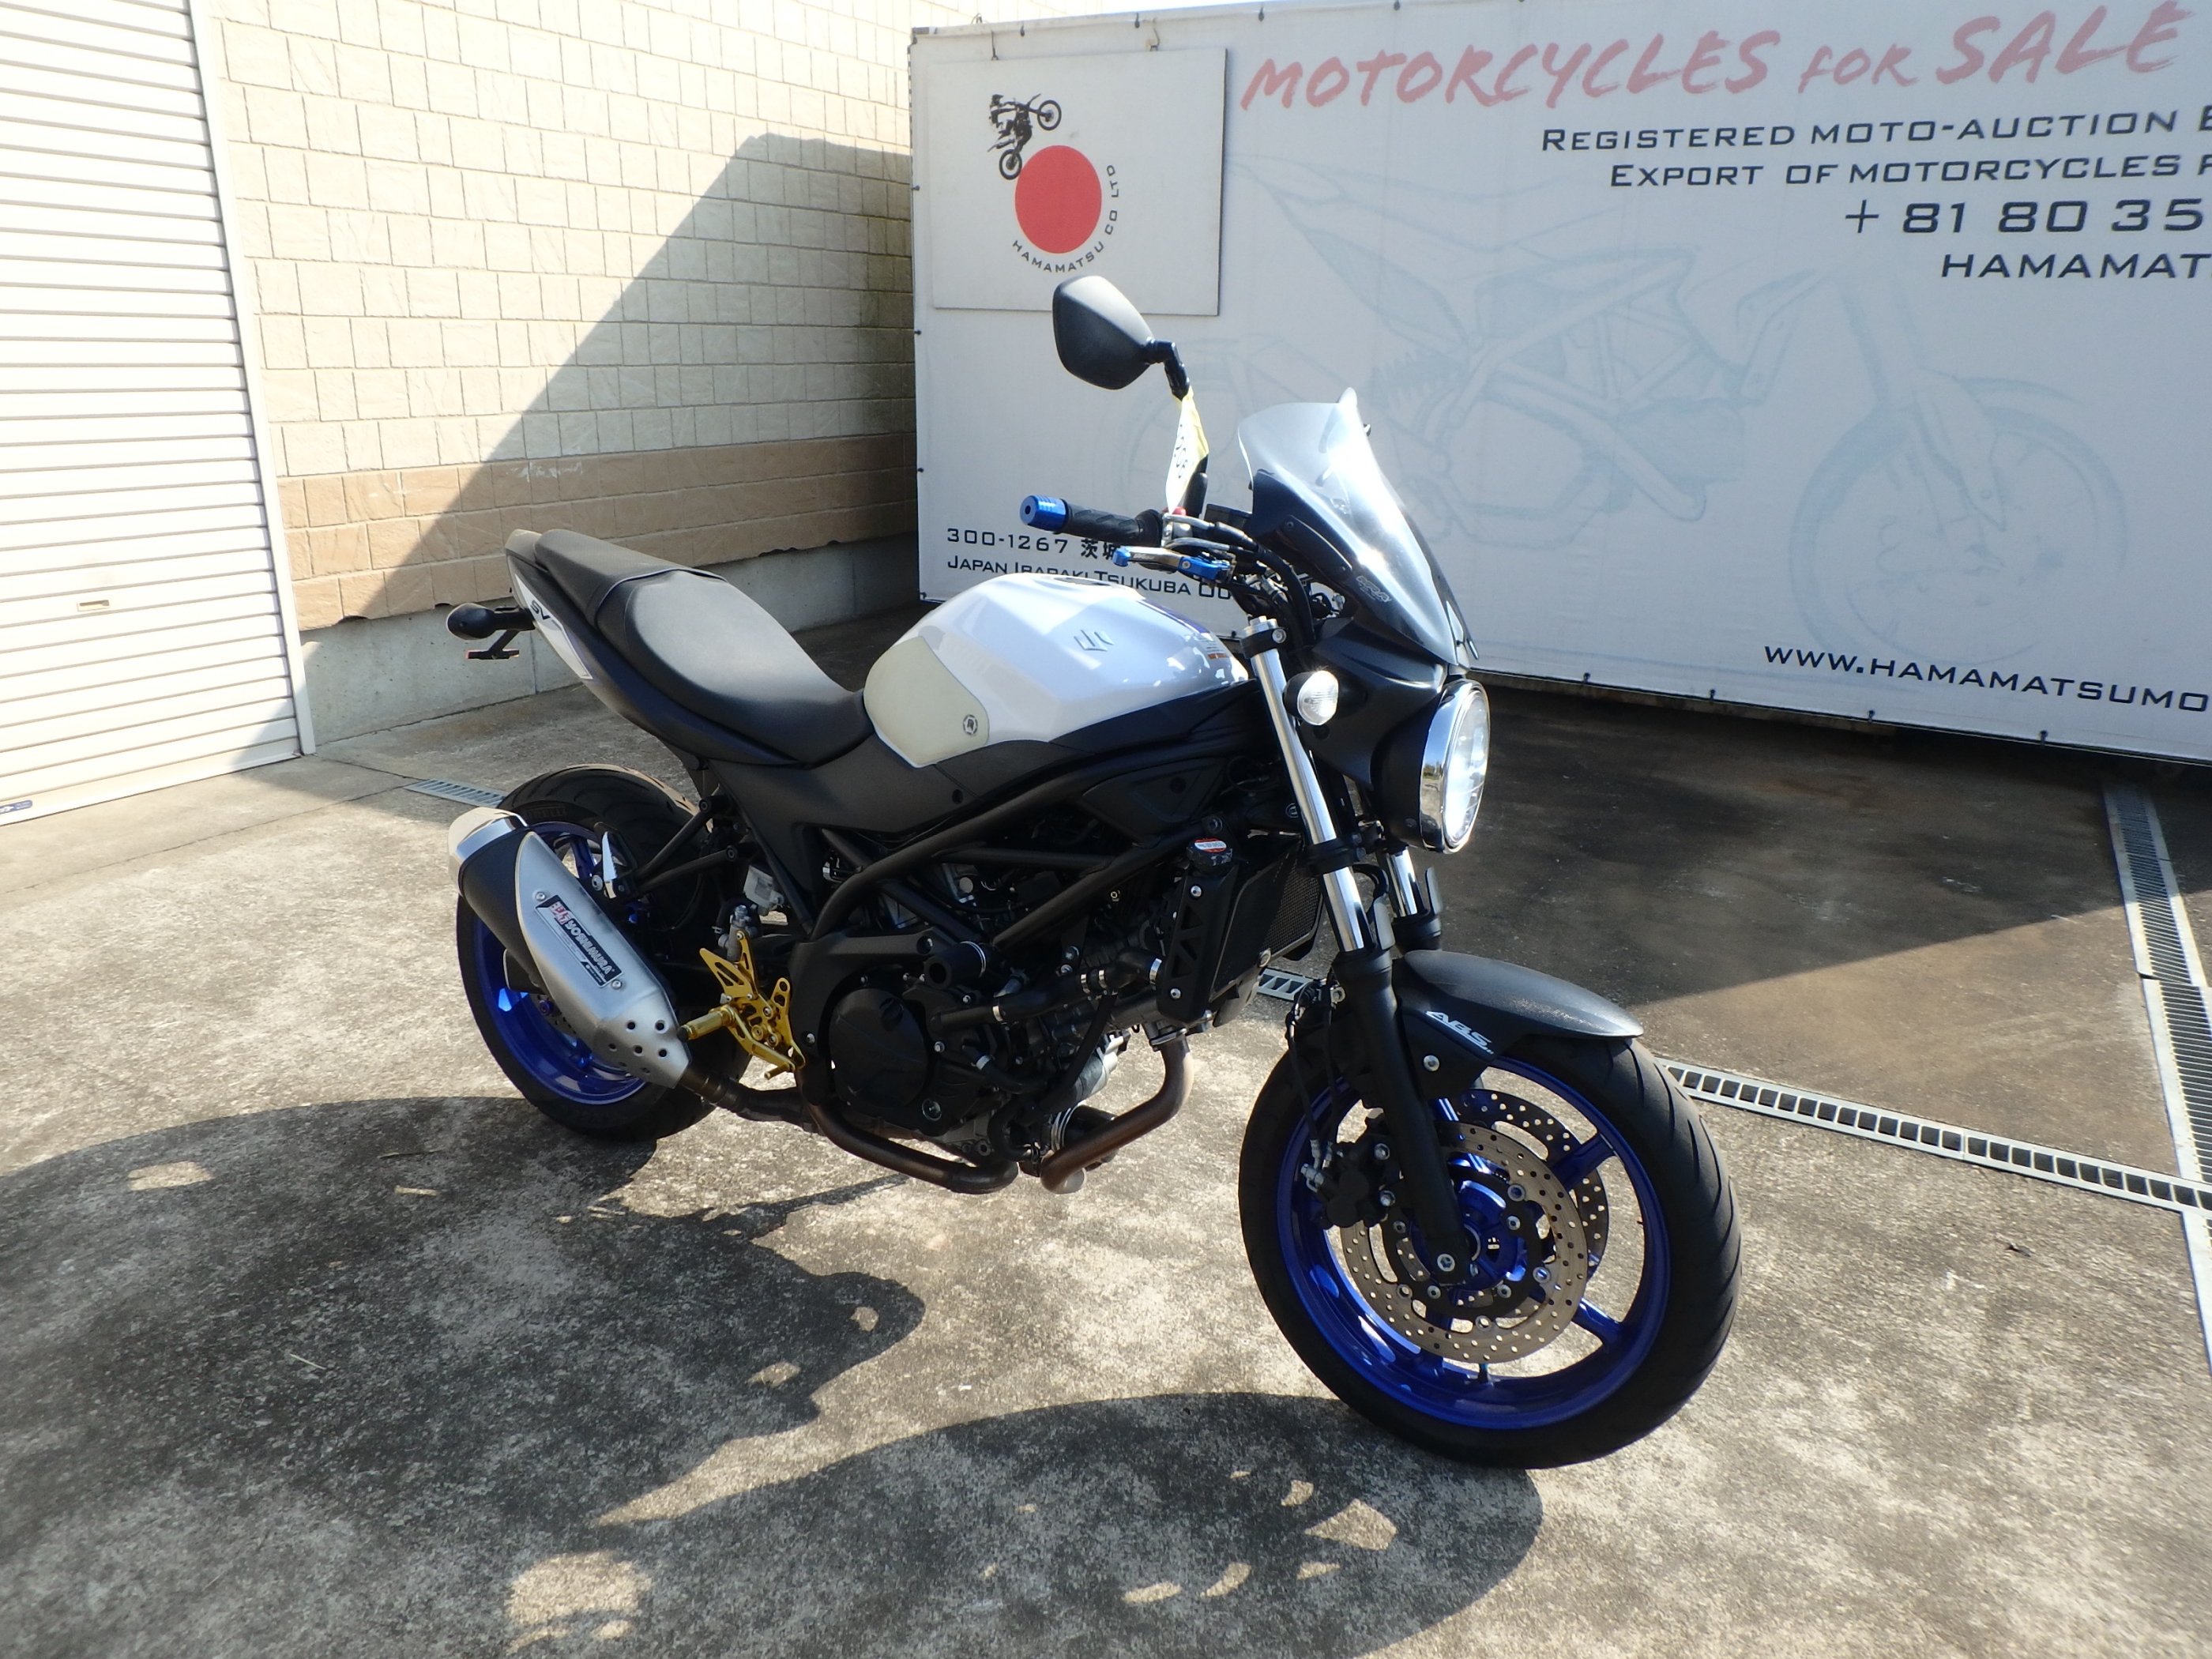 Купить мотоцикл Suzuki SV650A 2016 фото 7